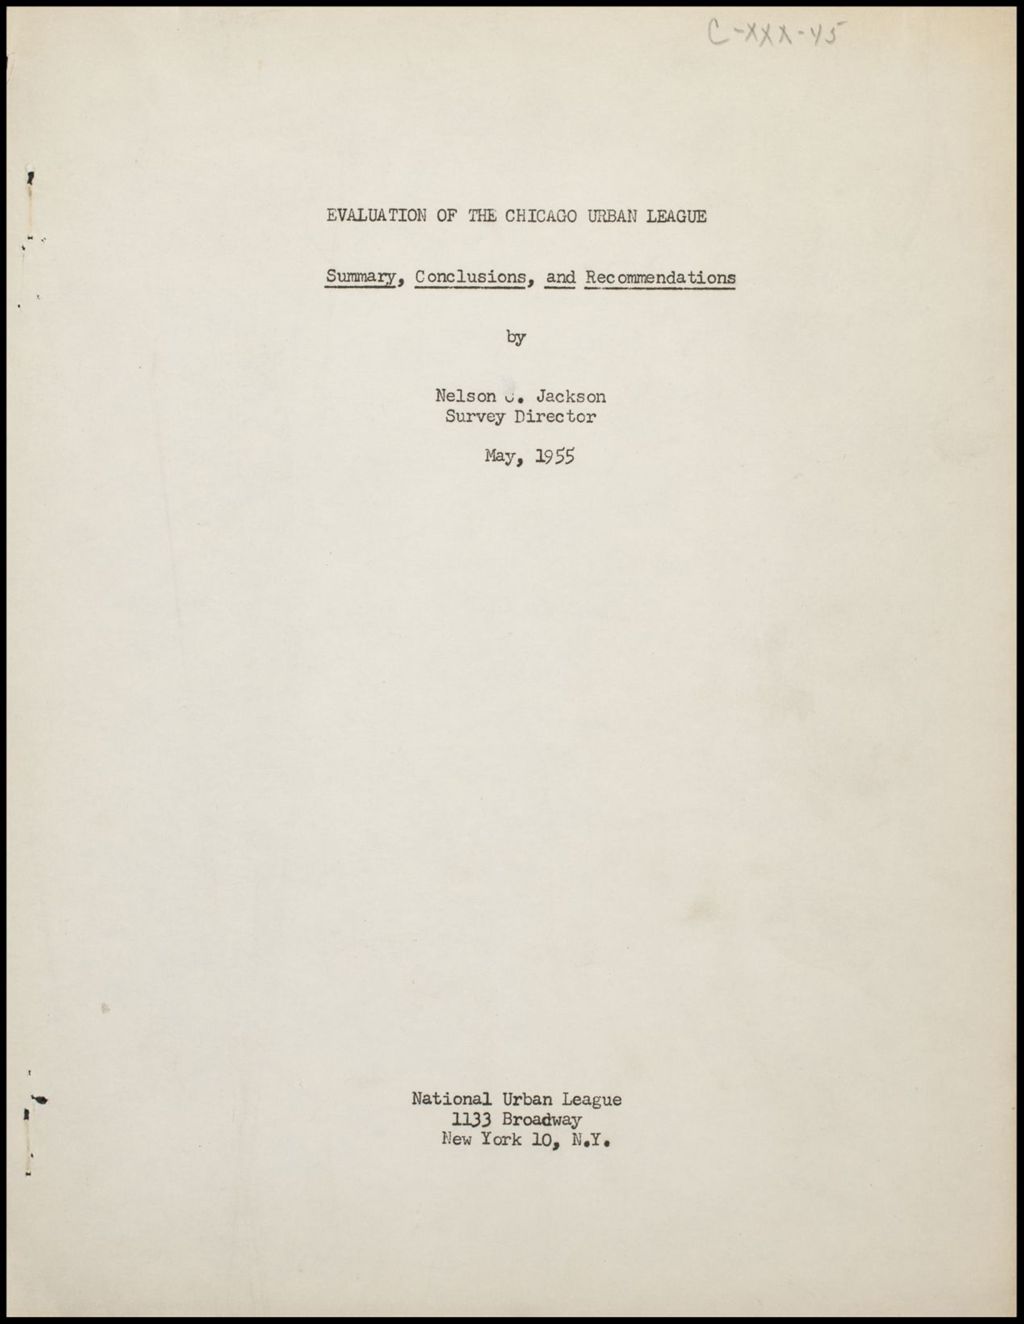 Background Study of the Negro Population of Chicago, 1955 (Folder III-2451)